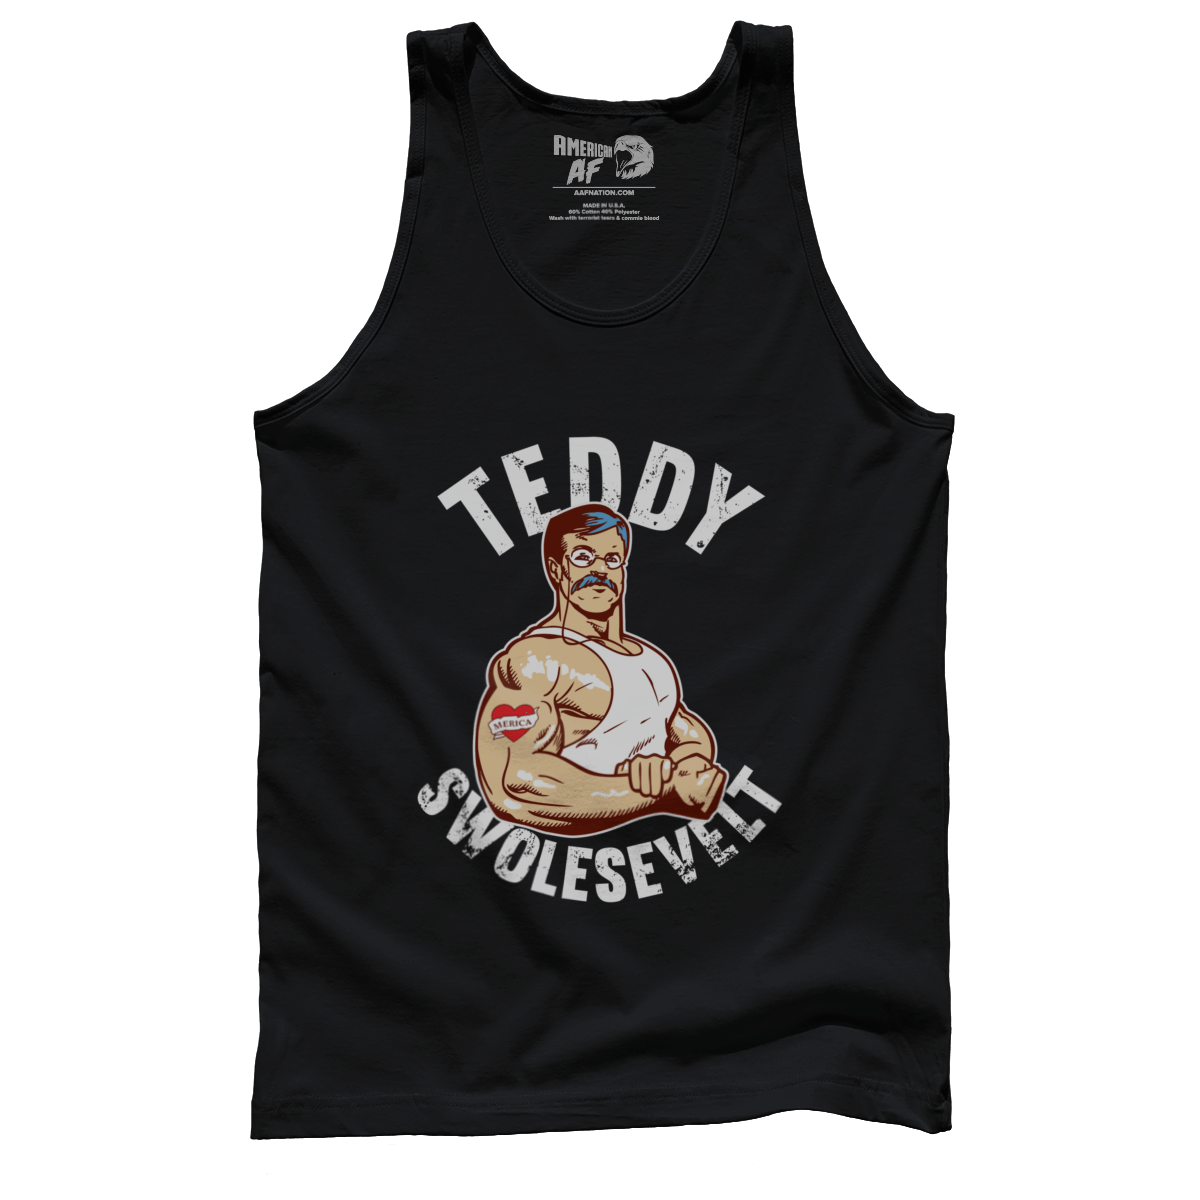 T-shirt Premium Mens Tank / Black / XS Teddy Swolesevelt